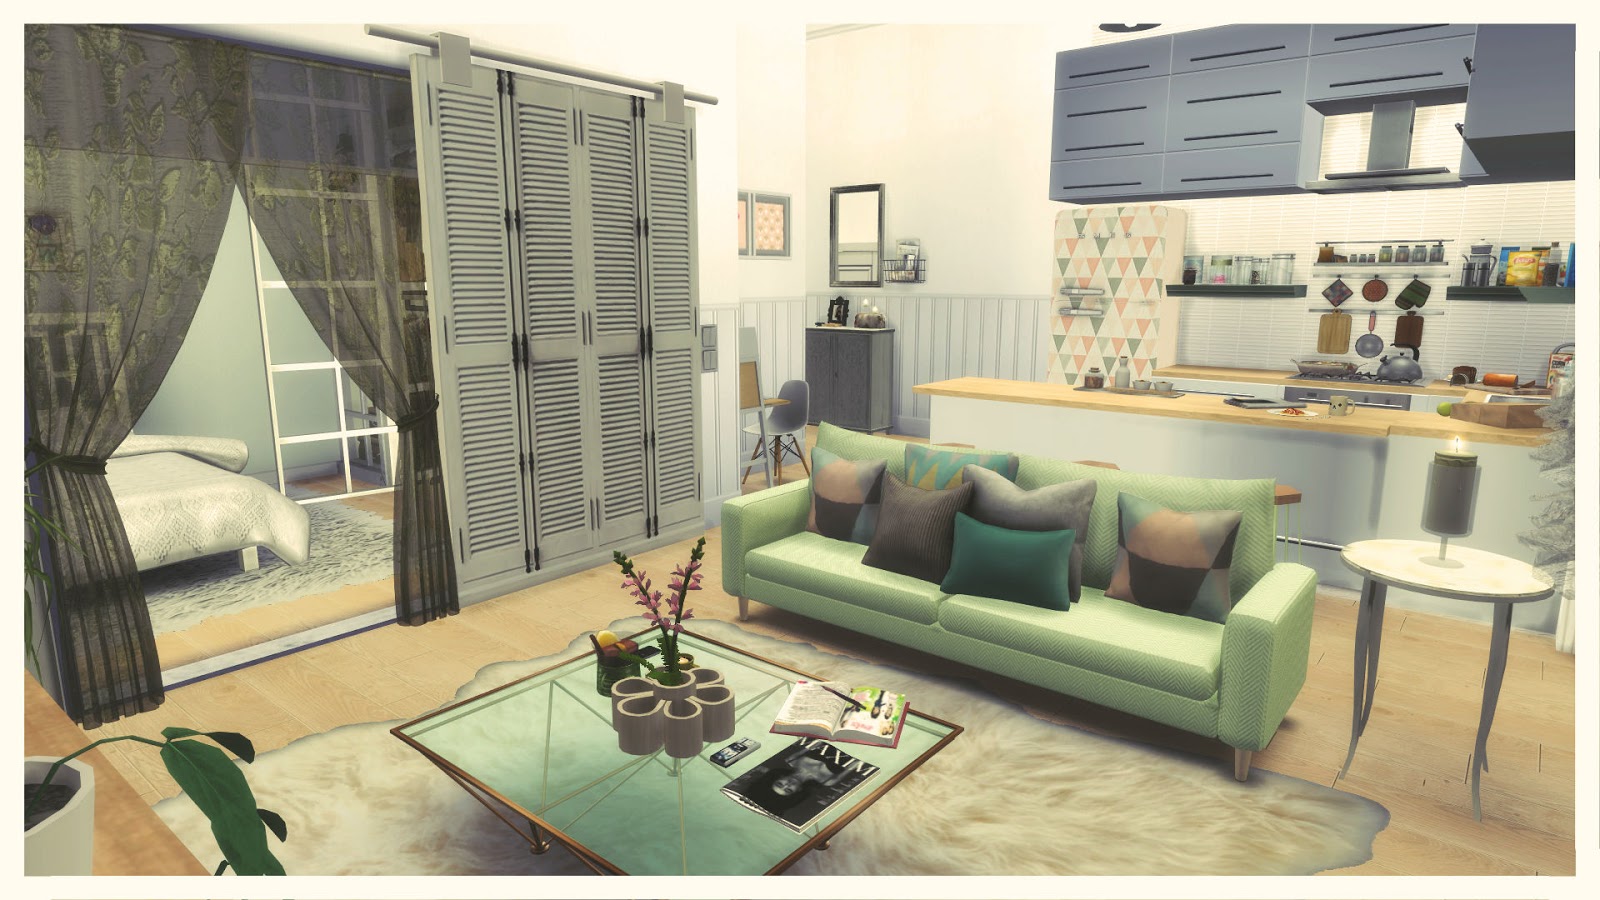 Sims 4 apartment building mod